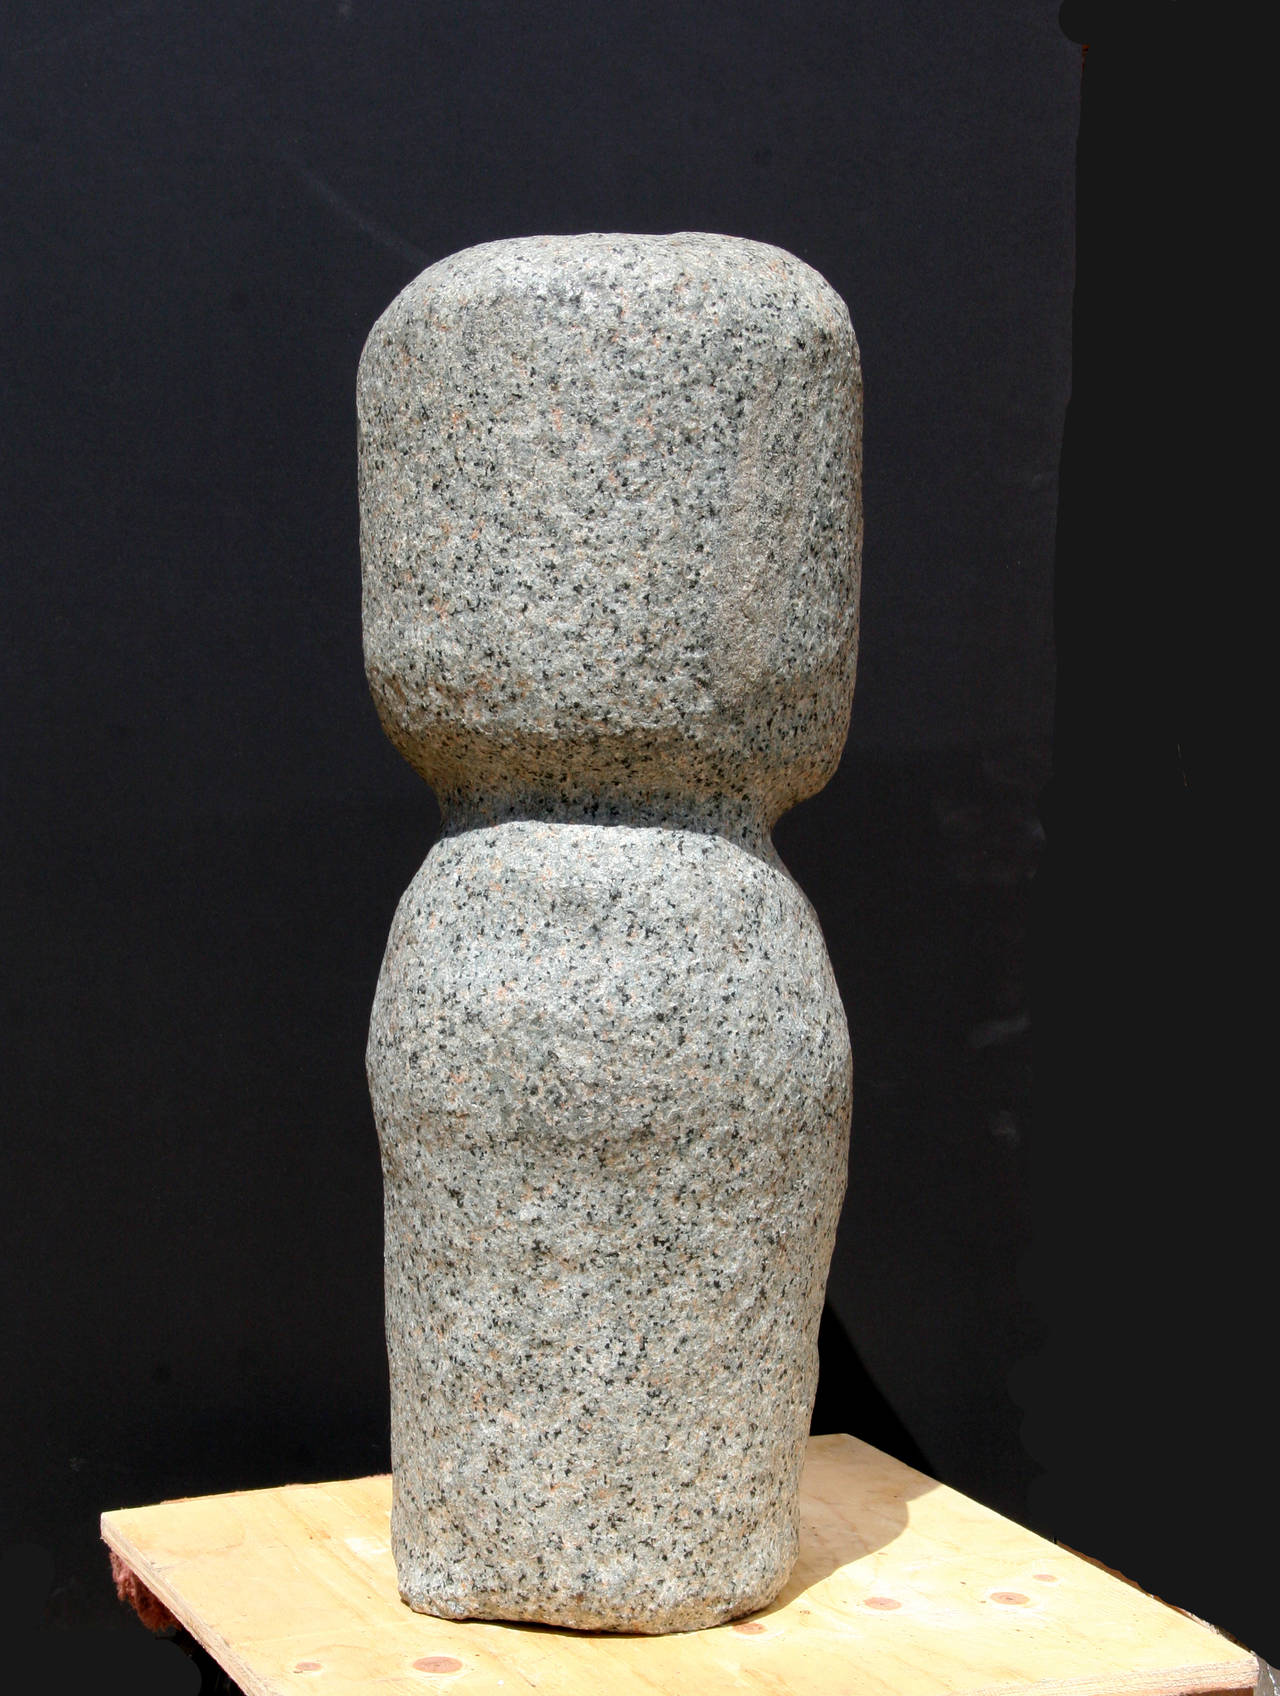 Artist: Unknown
Title: Owl
Medium: Granite Sculpture (Indoor/Outdoor)
Size: 36 x 12 inches